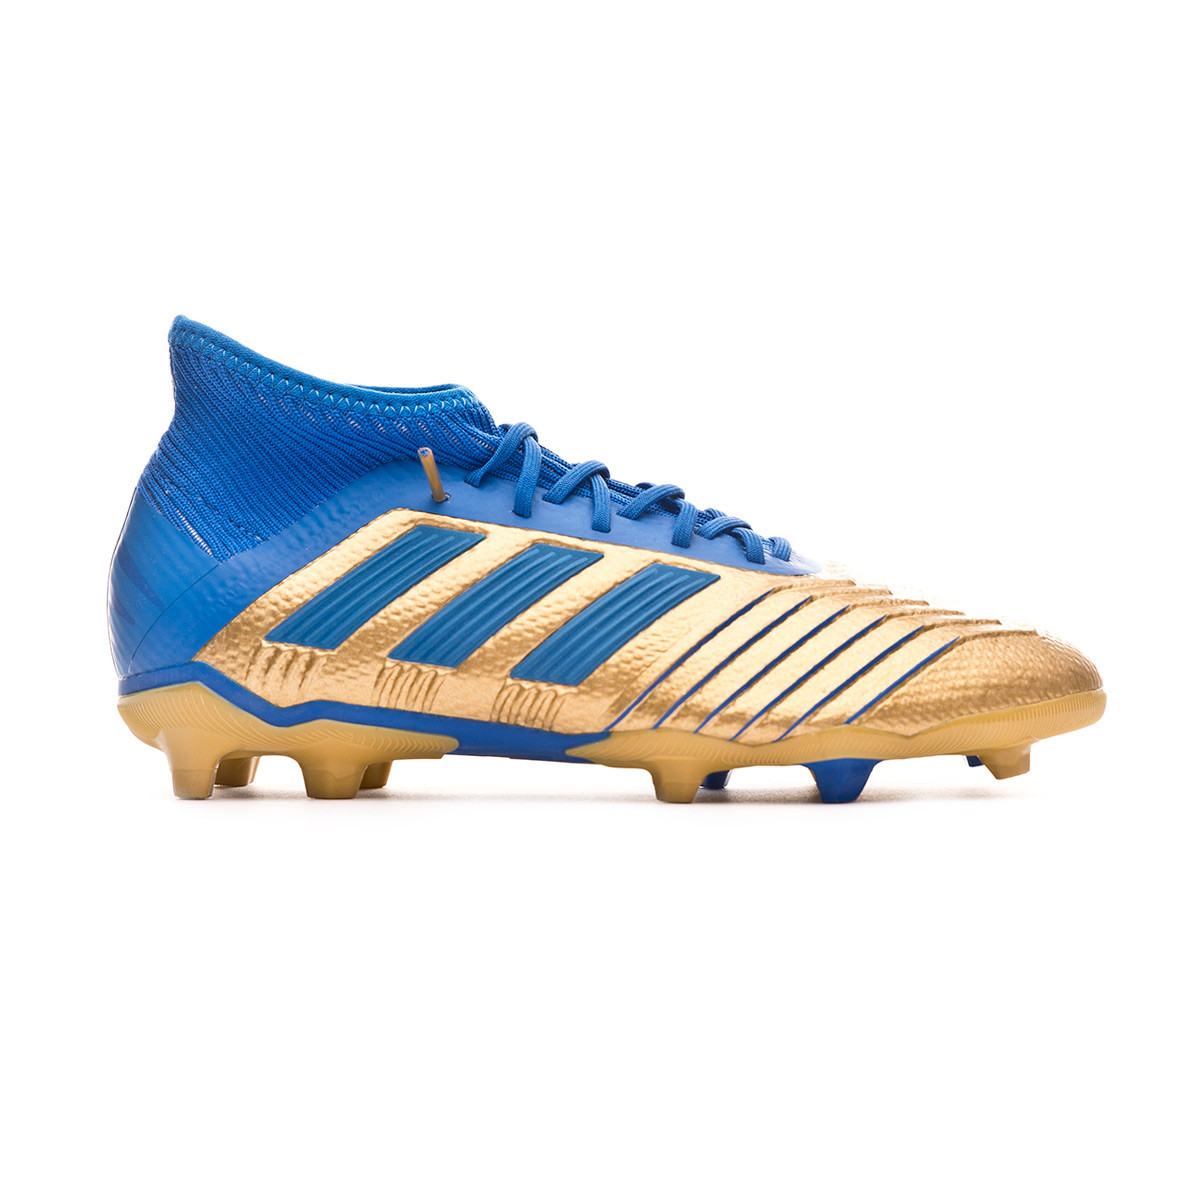 adidas predator 19.1 gold and blue